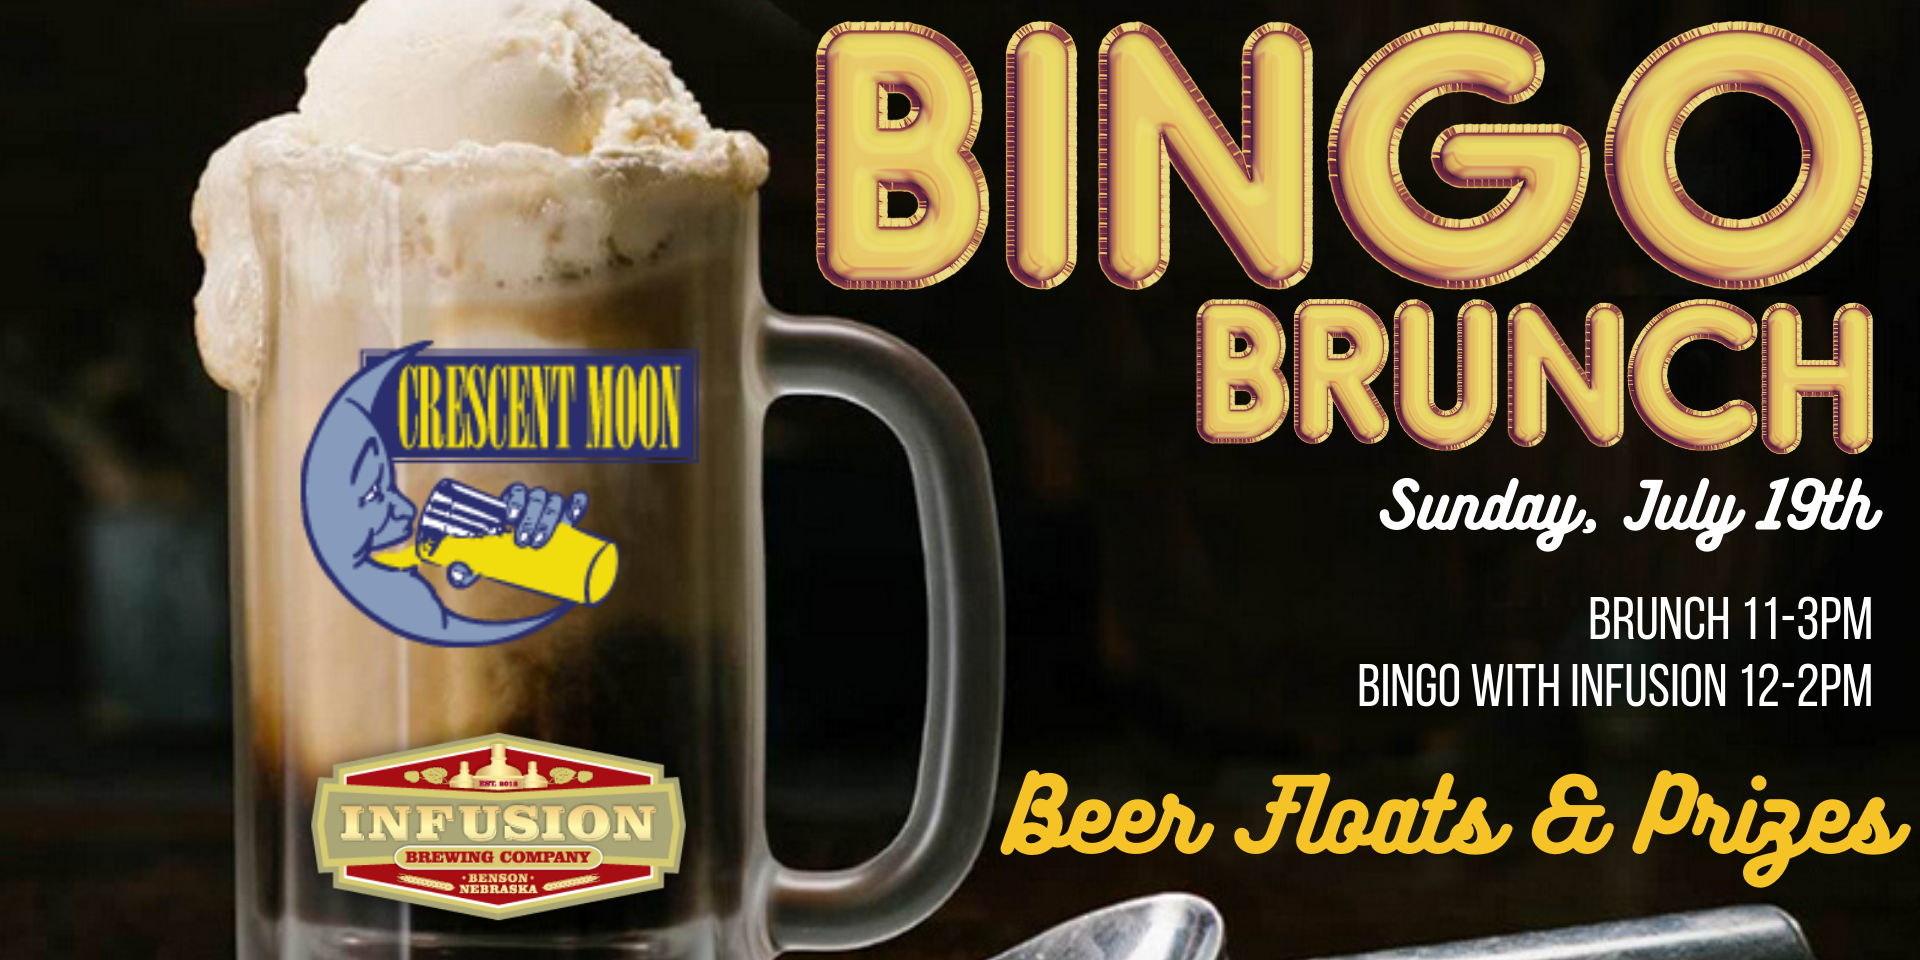 BINGO Brunch promotional image